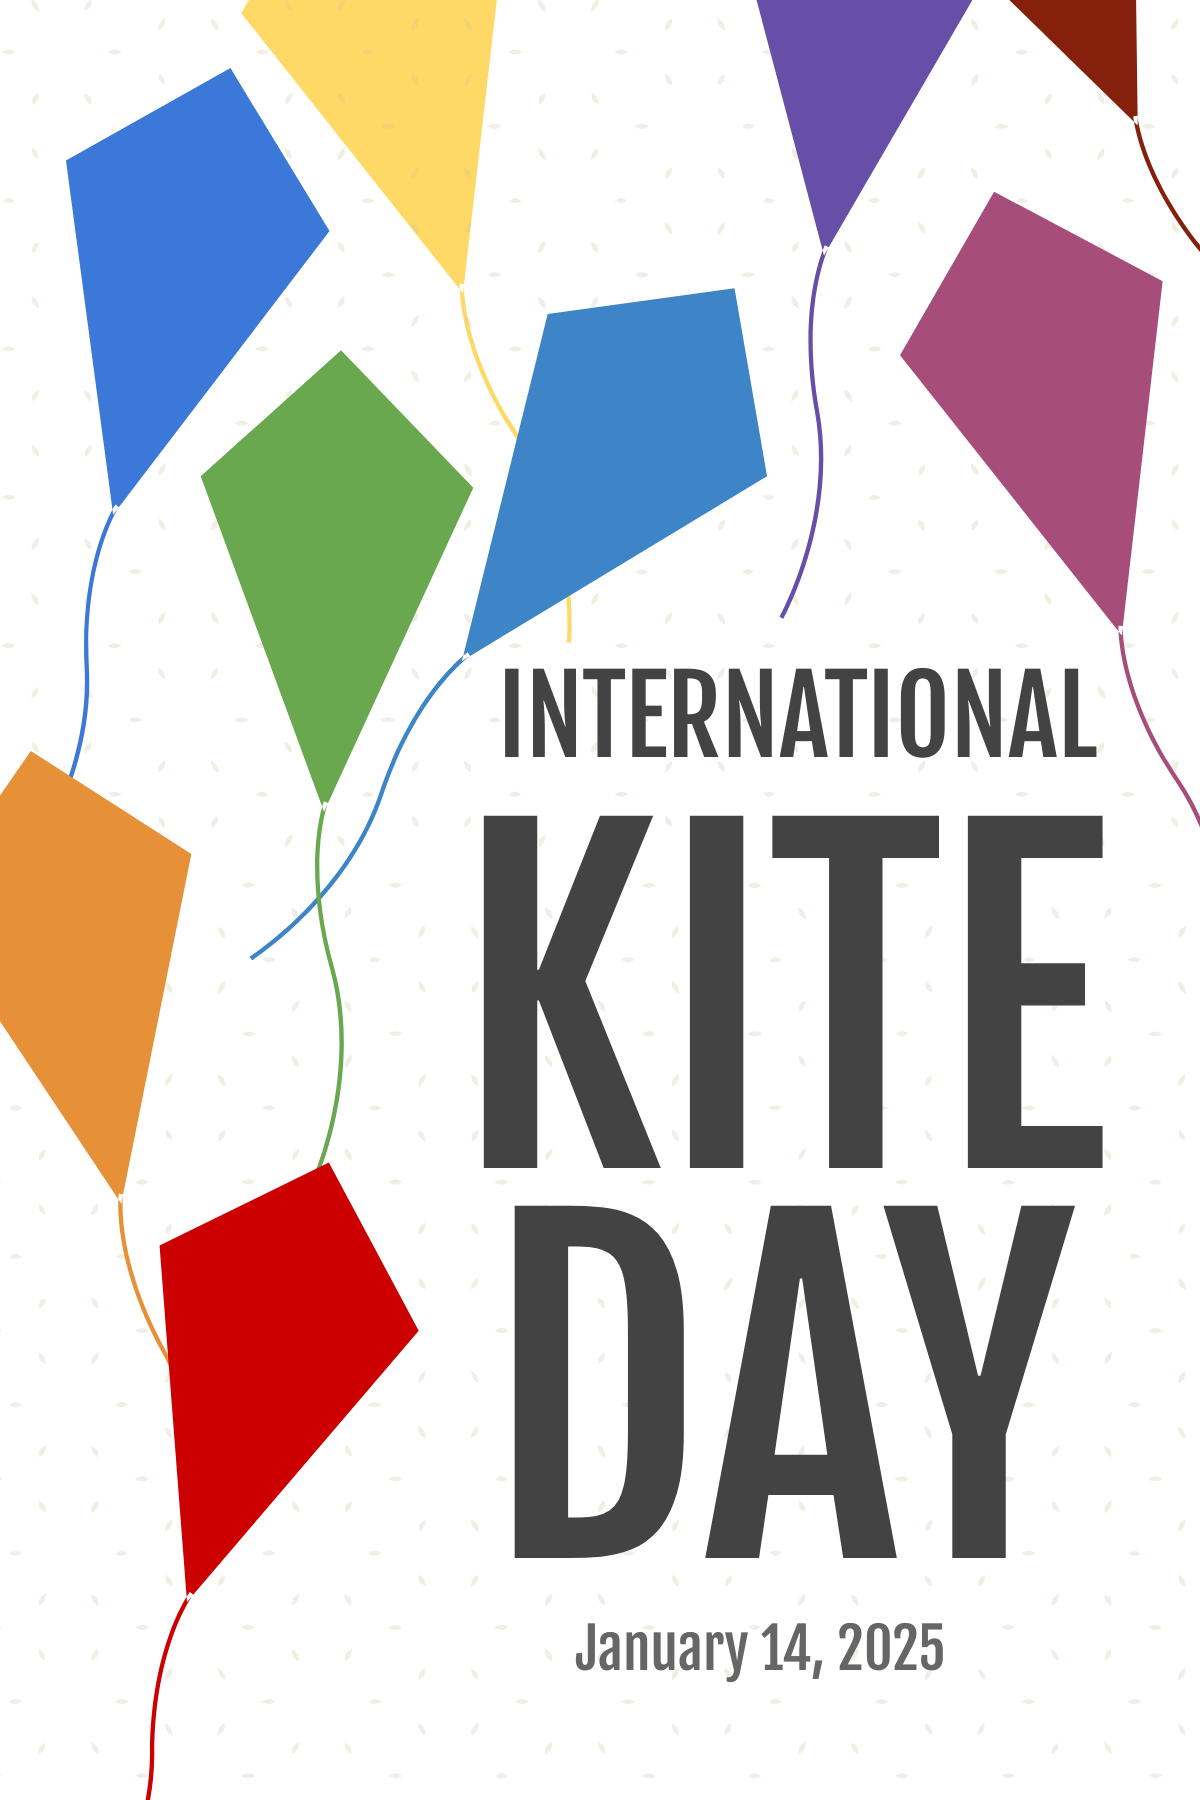 International Kites Day Pinterest Pin Template